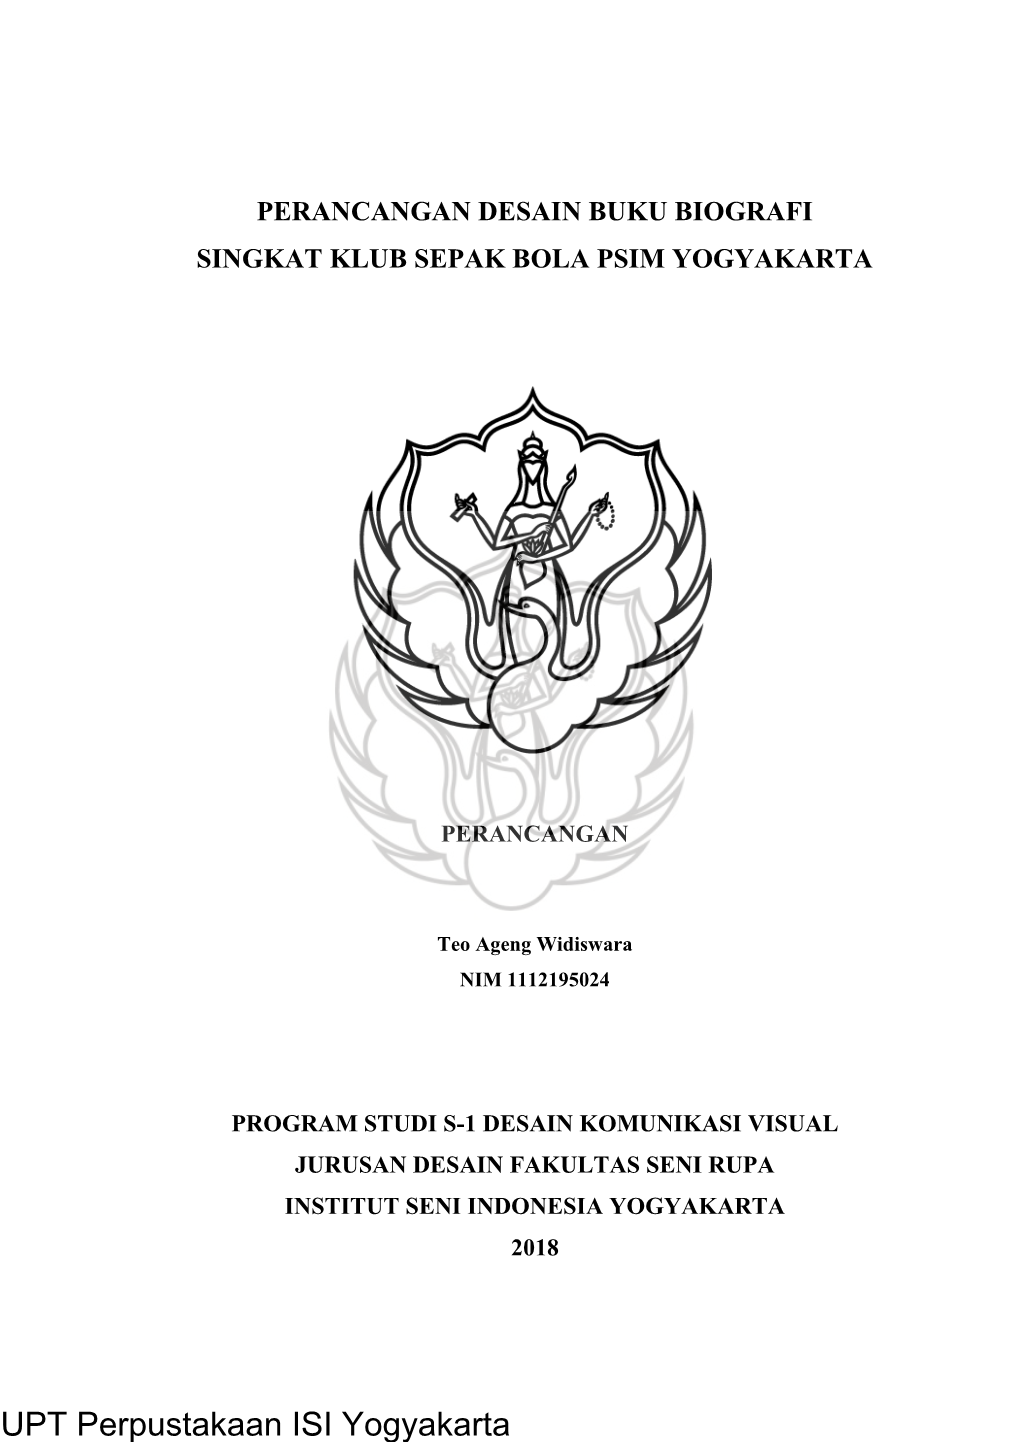 UPT Perpustakaan ISI Yogyakarta PERANCANGAN DESAIN BUKU BIOGRAFI SINGKATKLUB SEPAK BOLA PSIM YOGYAKARTA